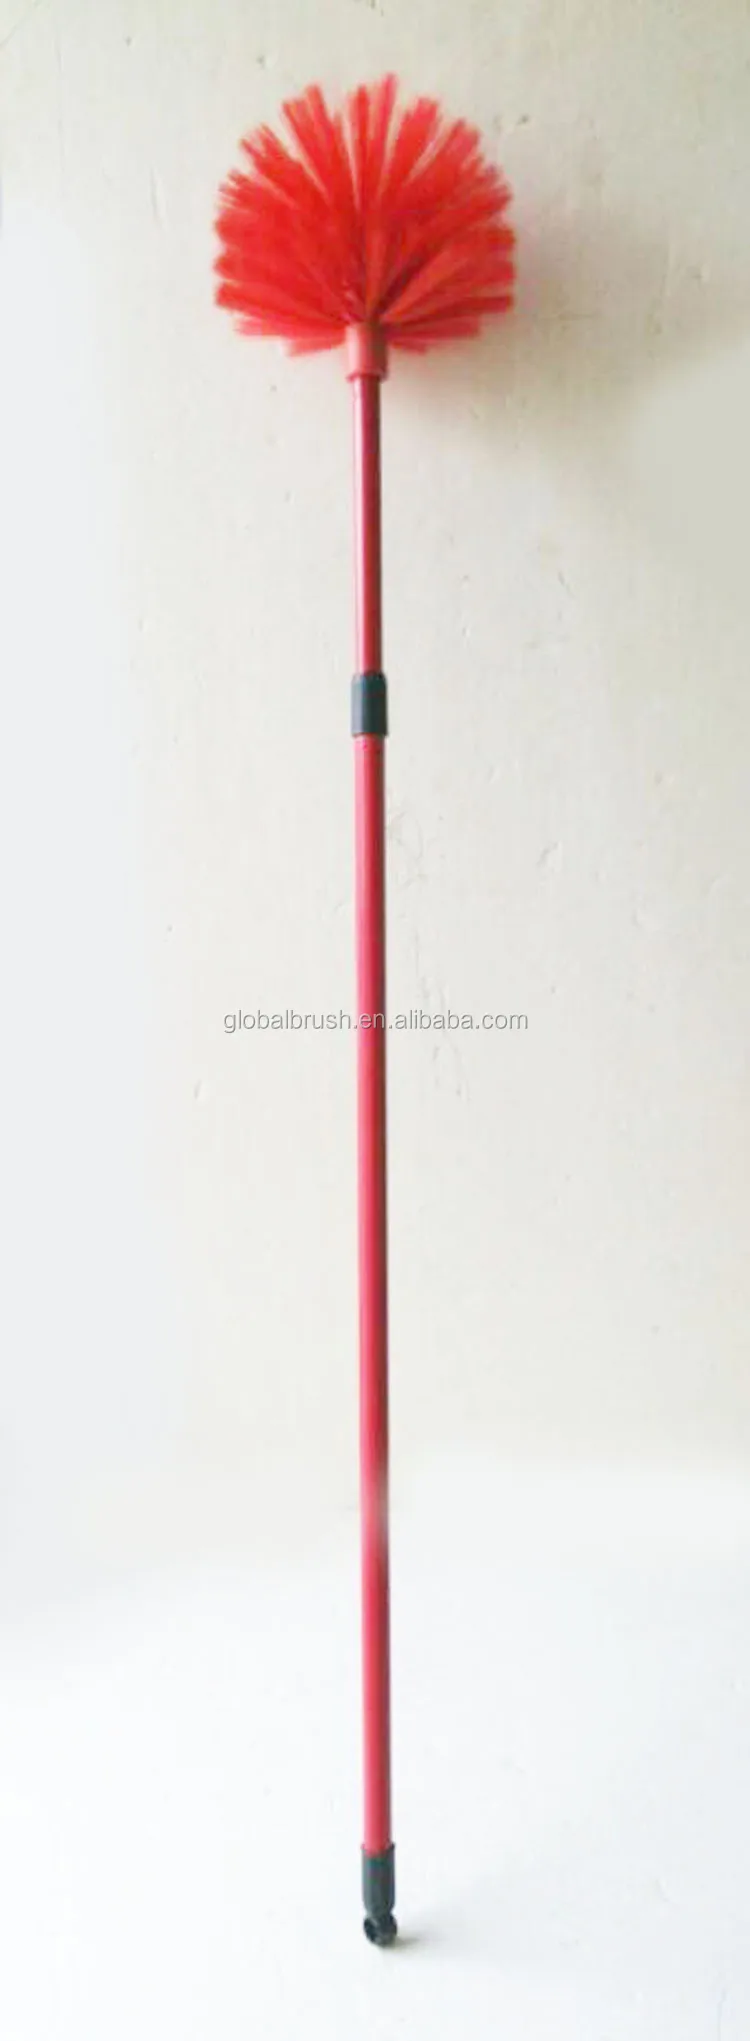 Image result for ceiling broom